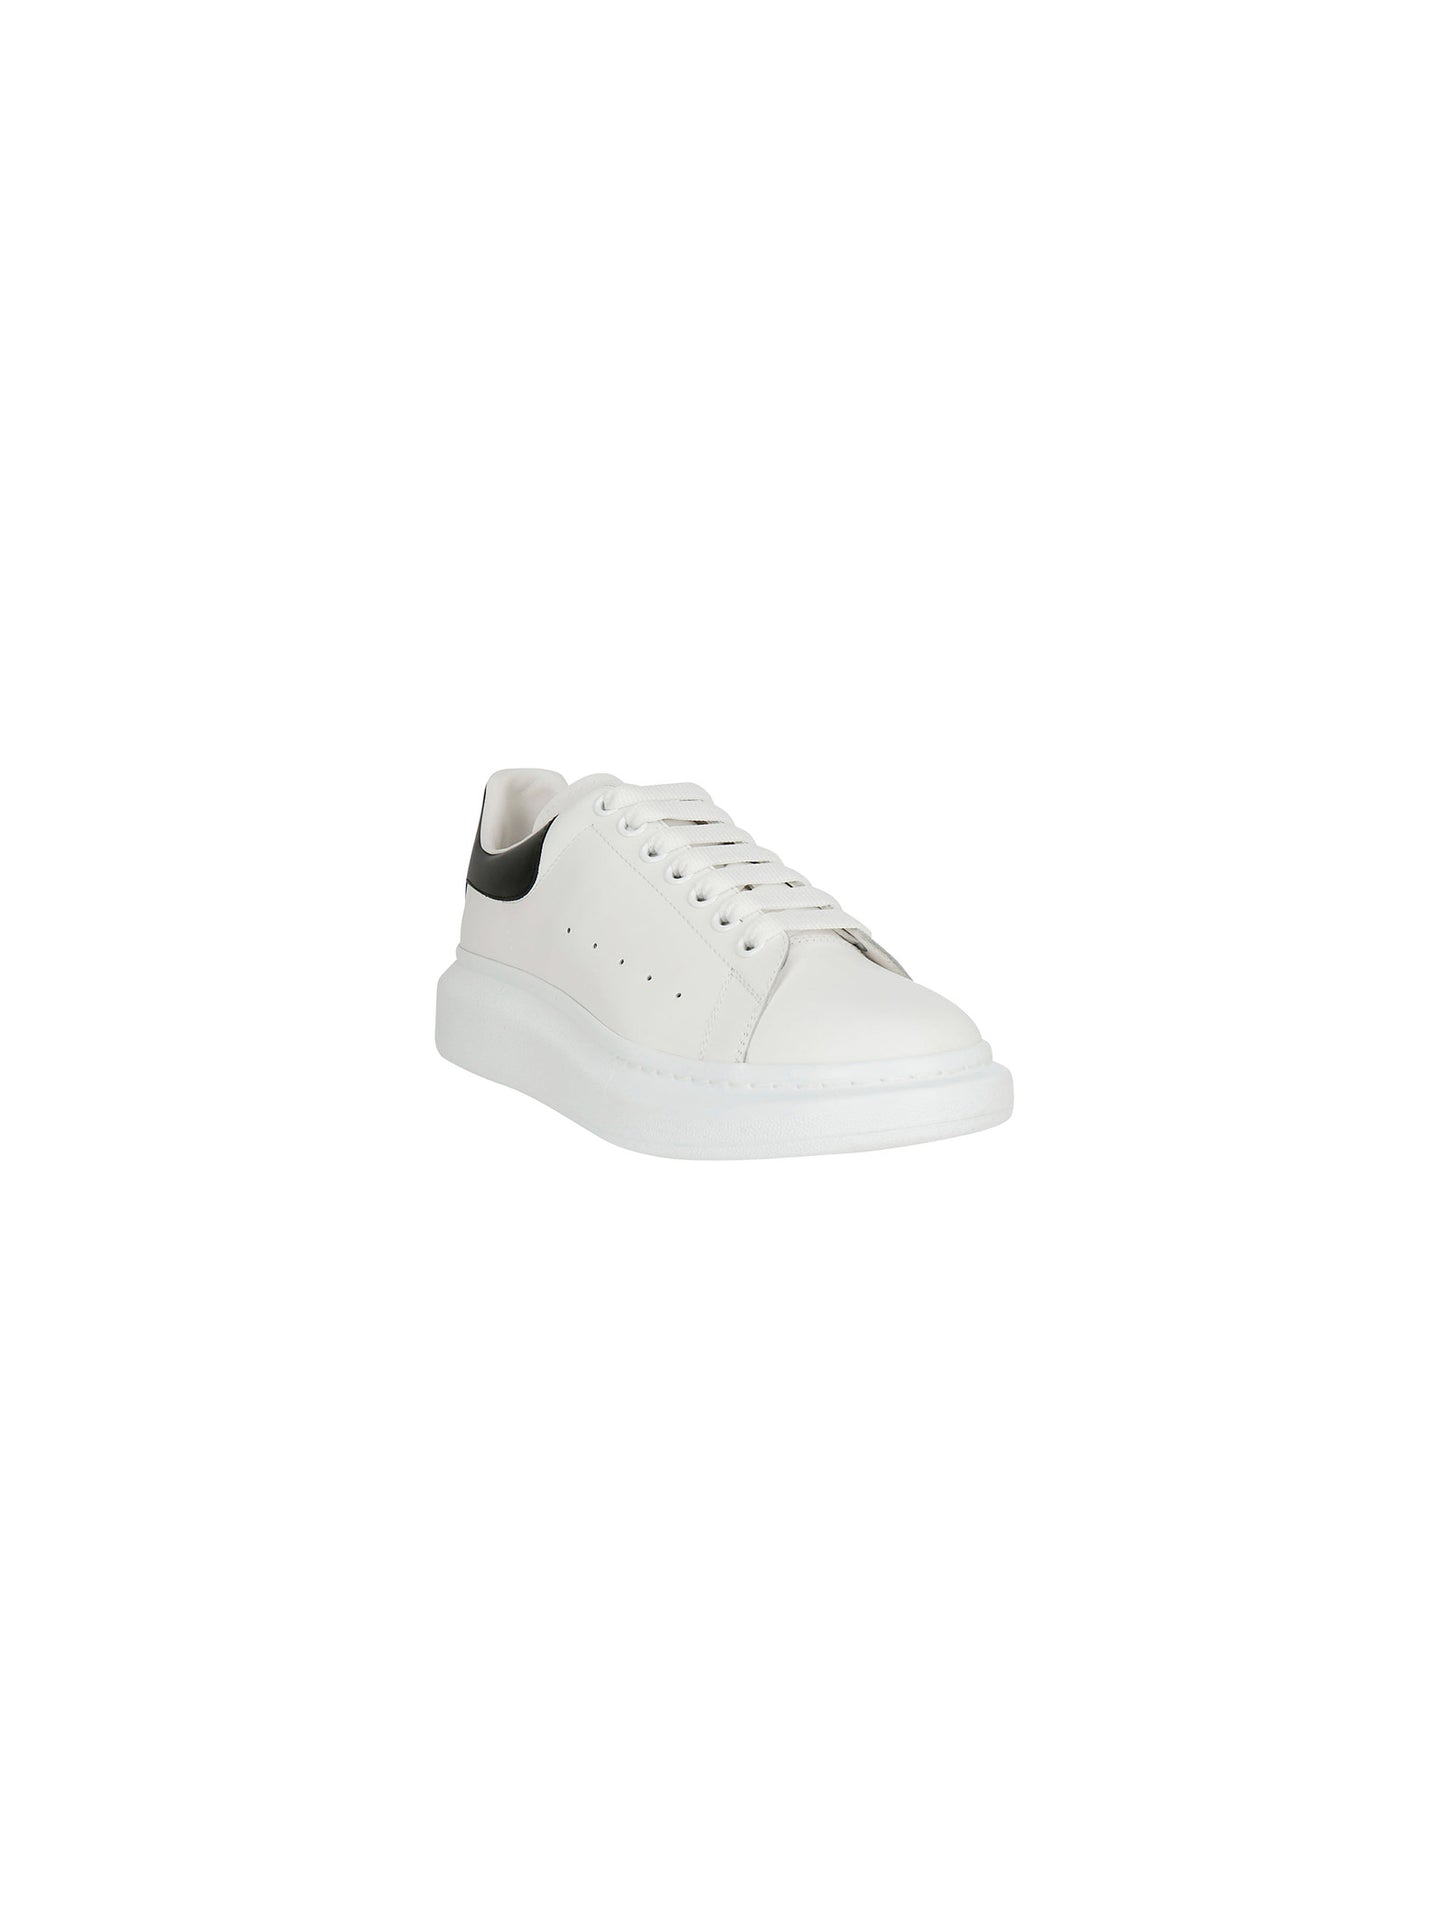 Oversized Sneakers - White/Black